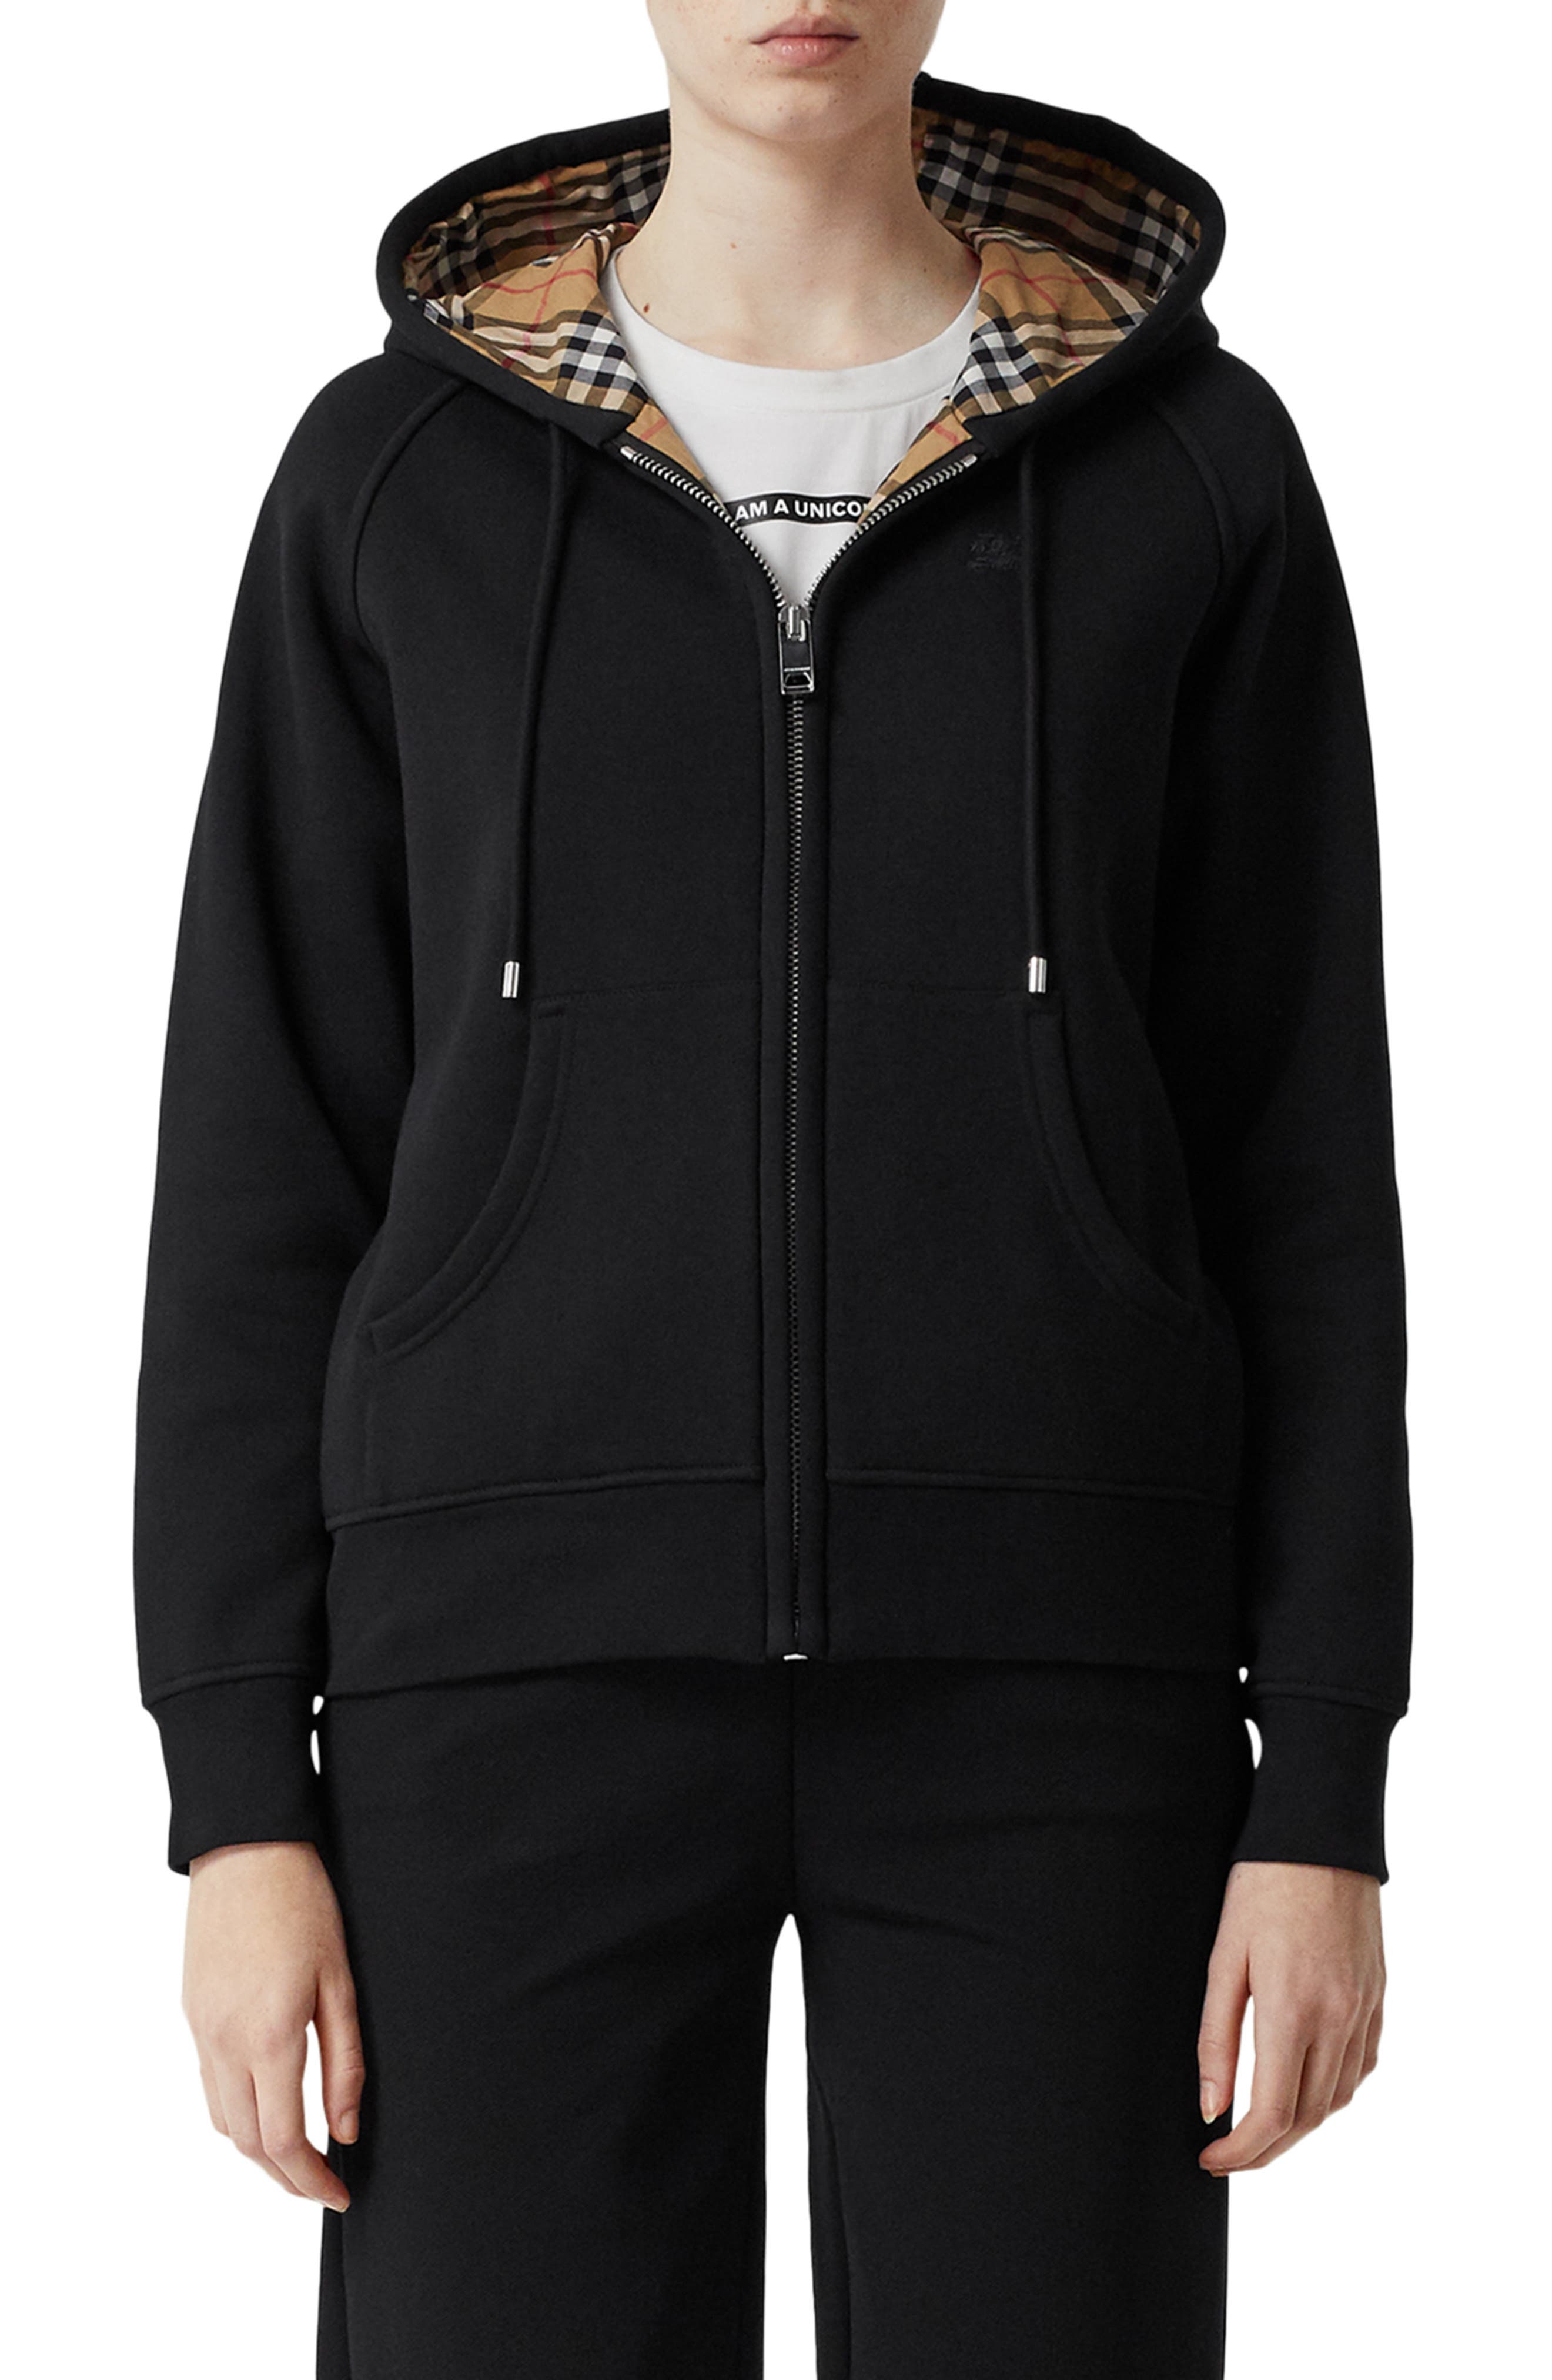 burberry hoodie womens sale